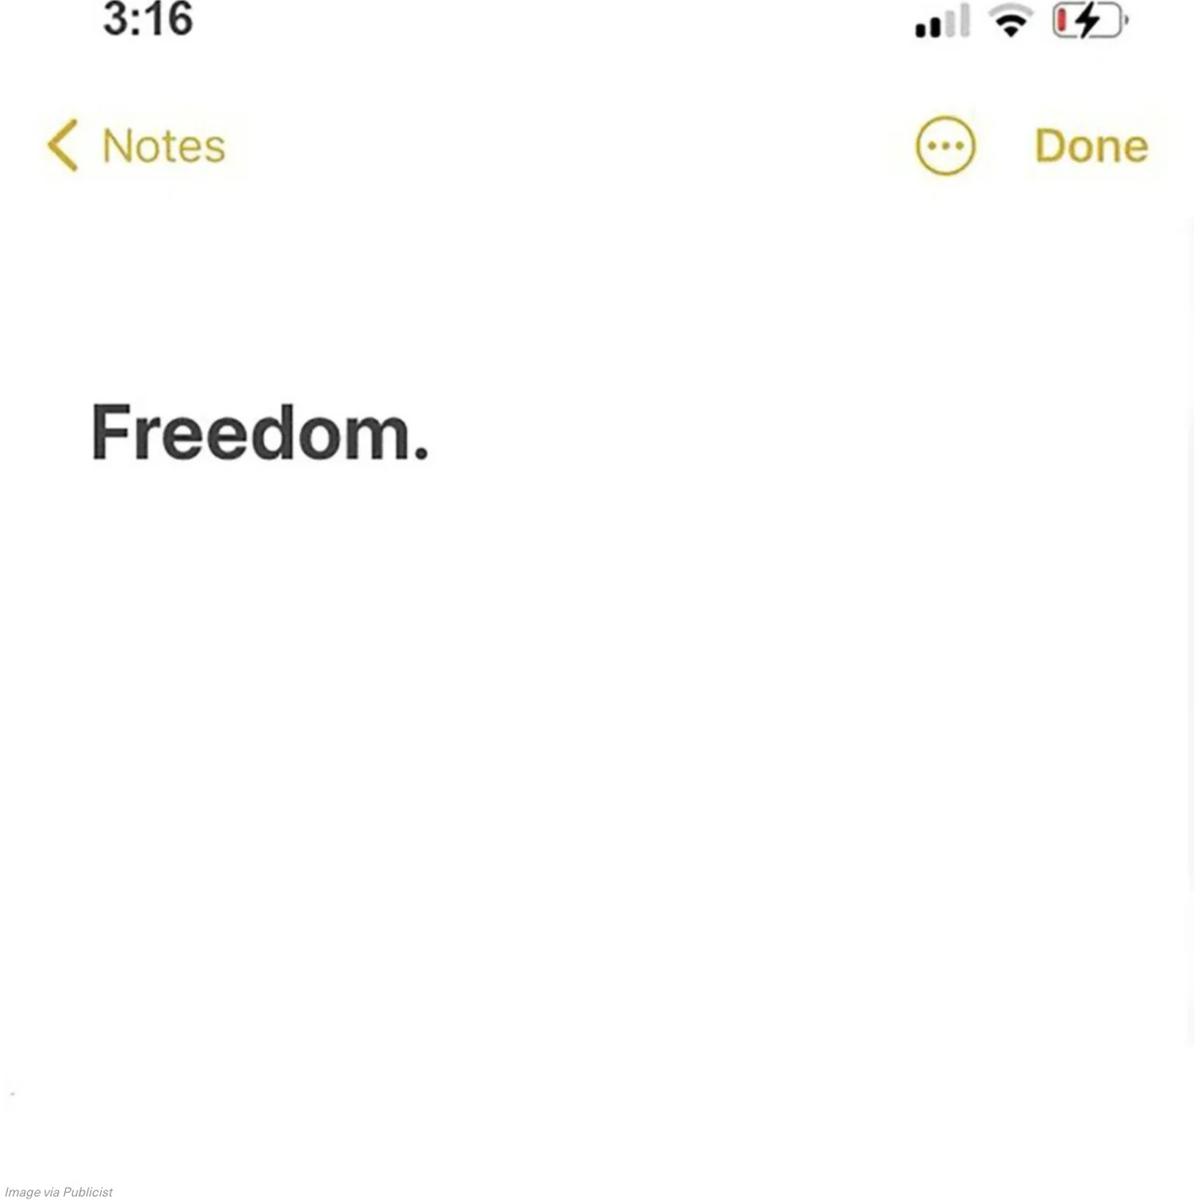 Listen To “Freedom” By Justin Bieber